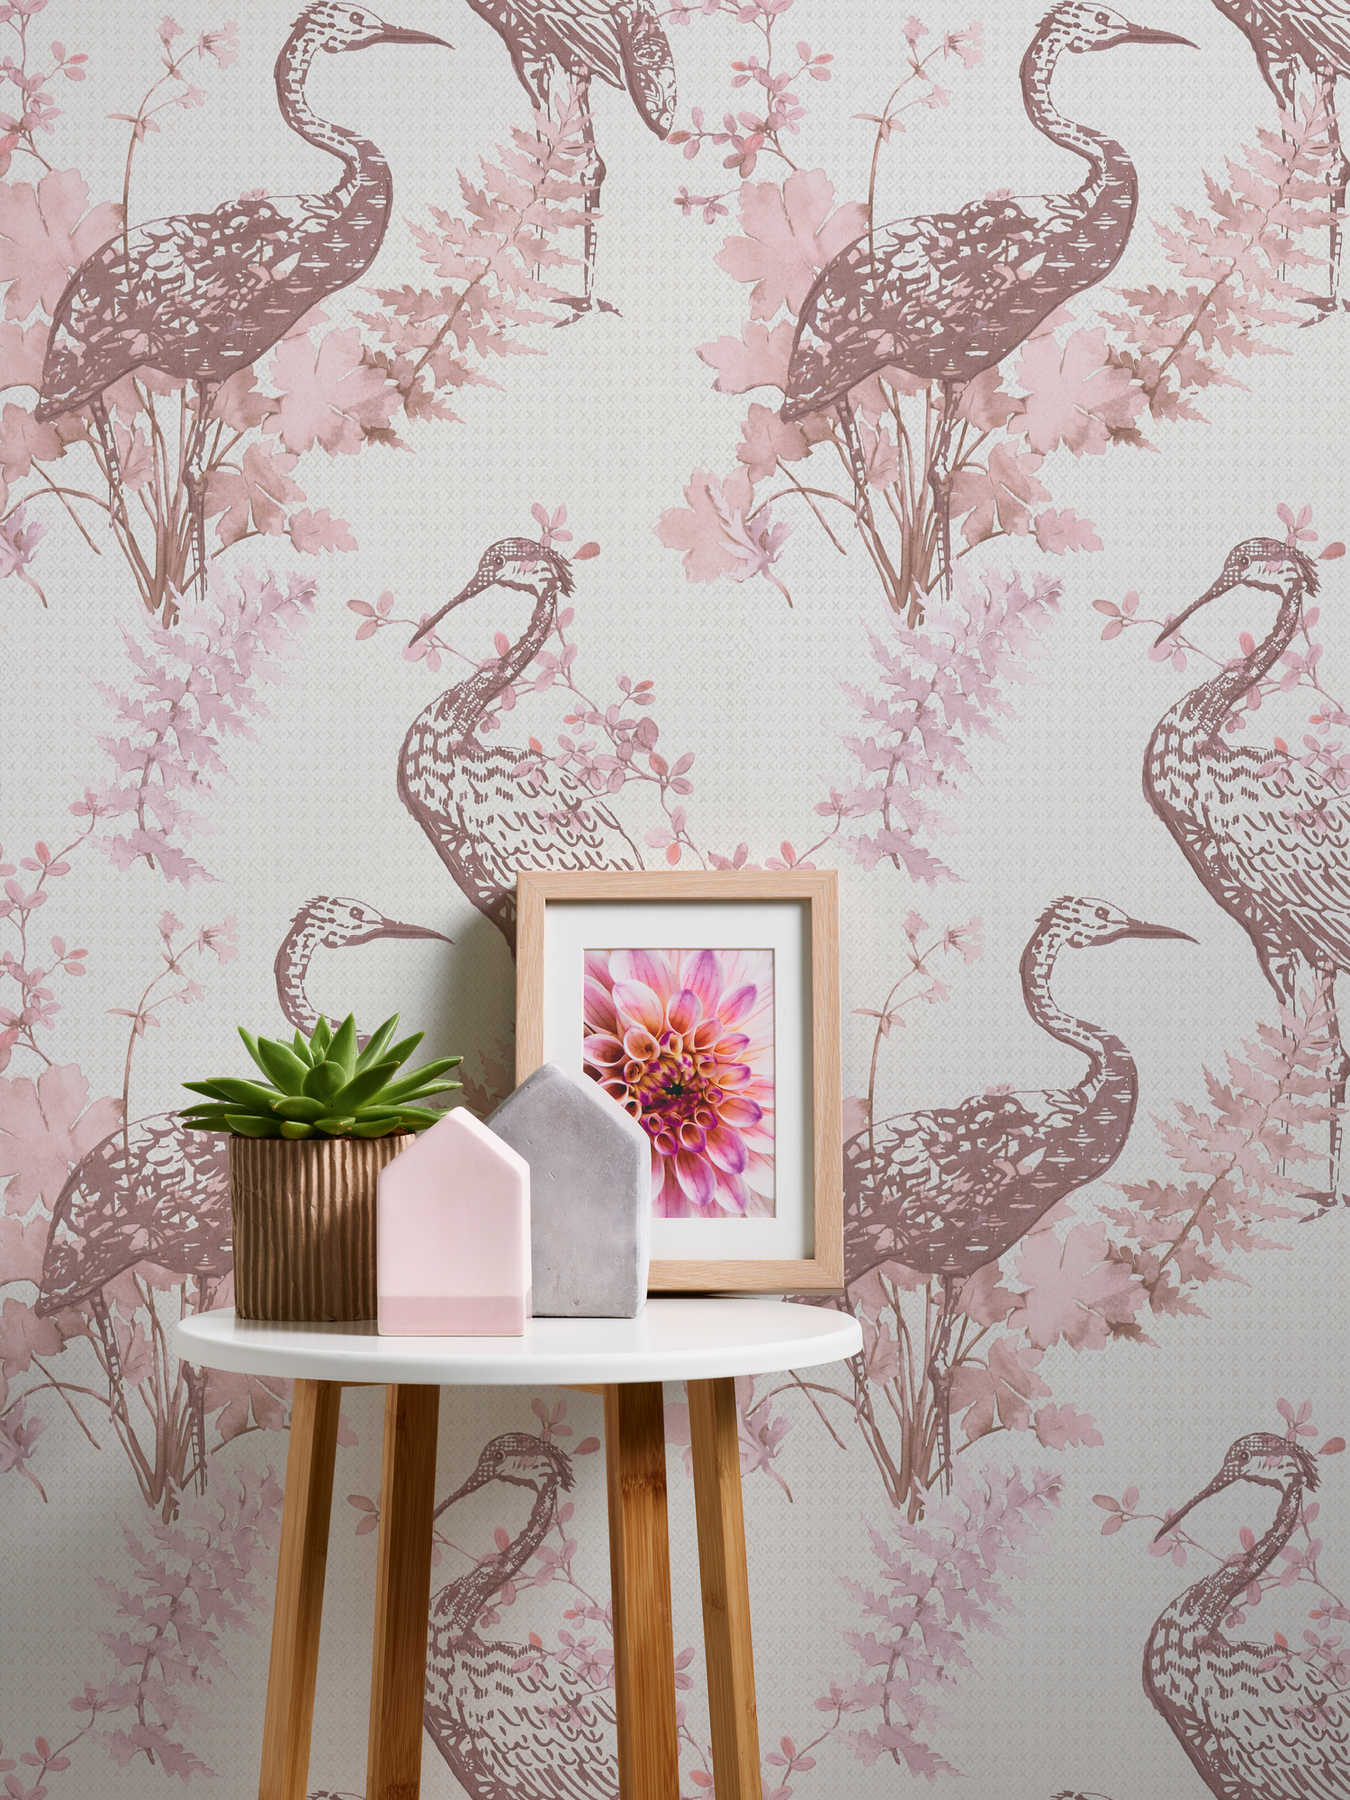             Carta da parati natura uccelli e foglie in stile acquerello - beige, rosa
        